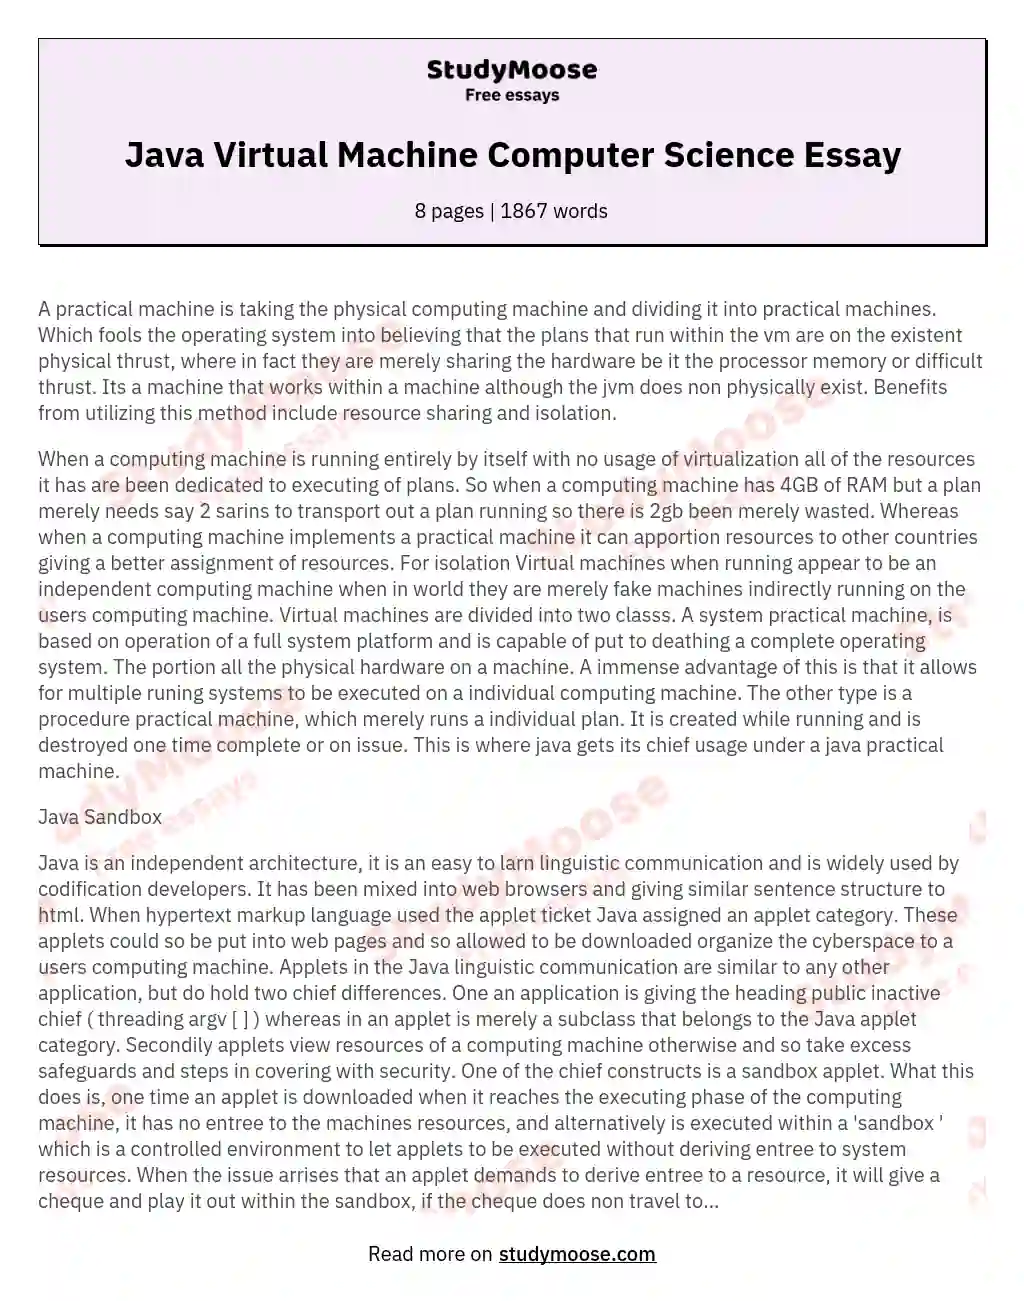 Java Virtual Machine Computer Science Essay essay